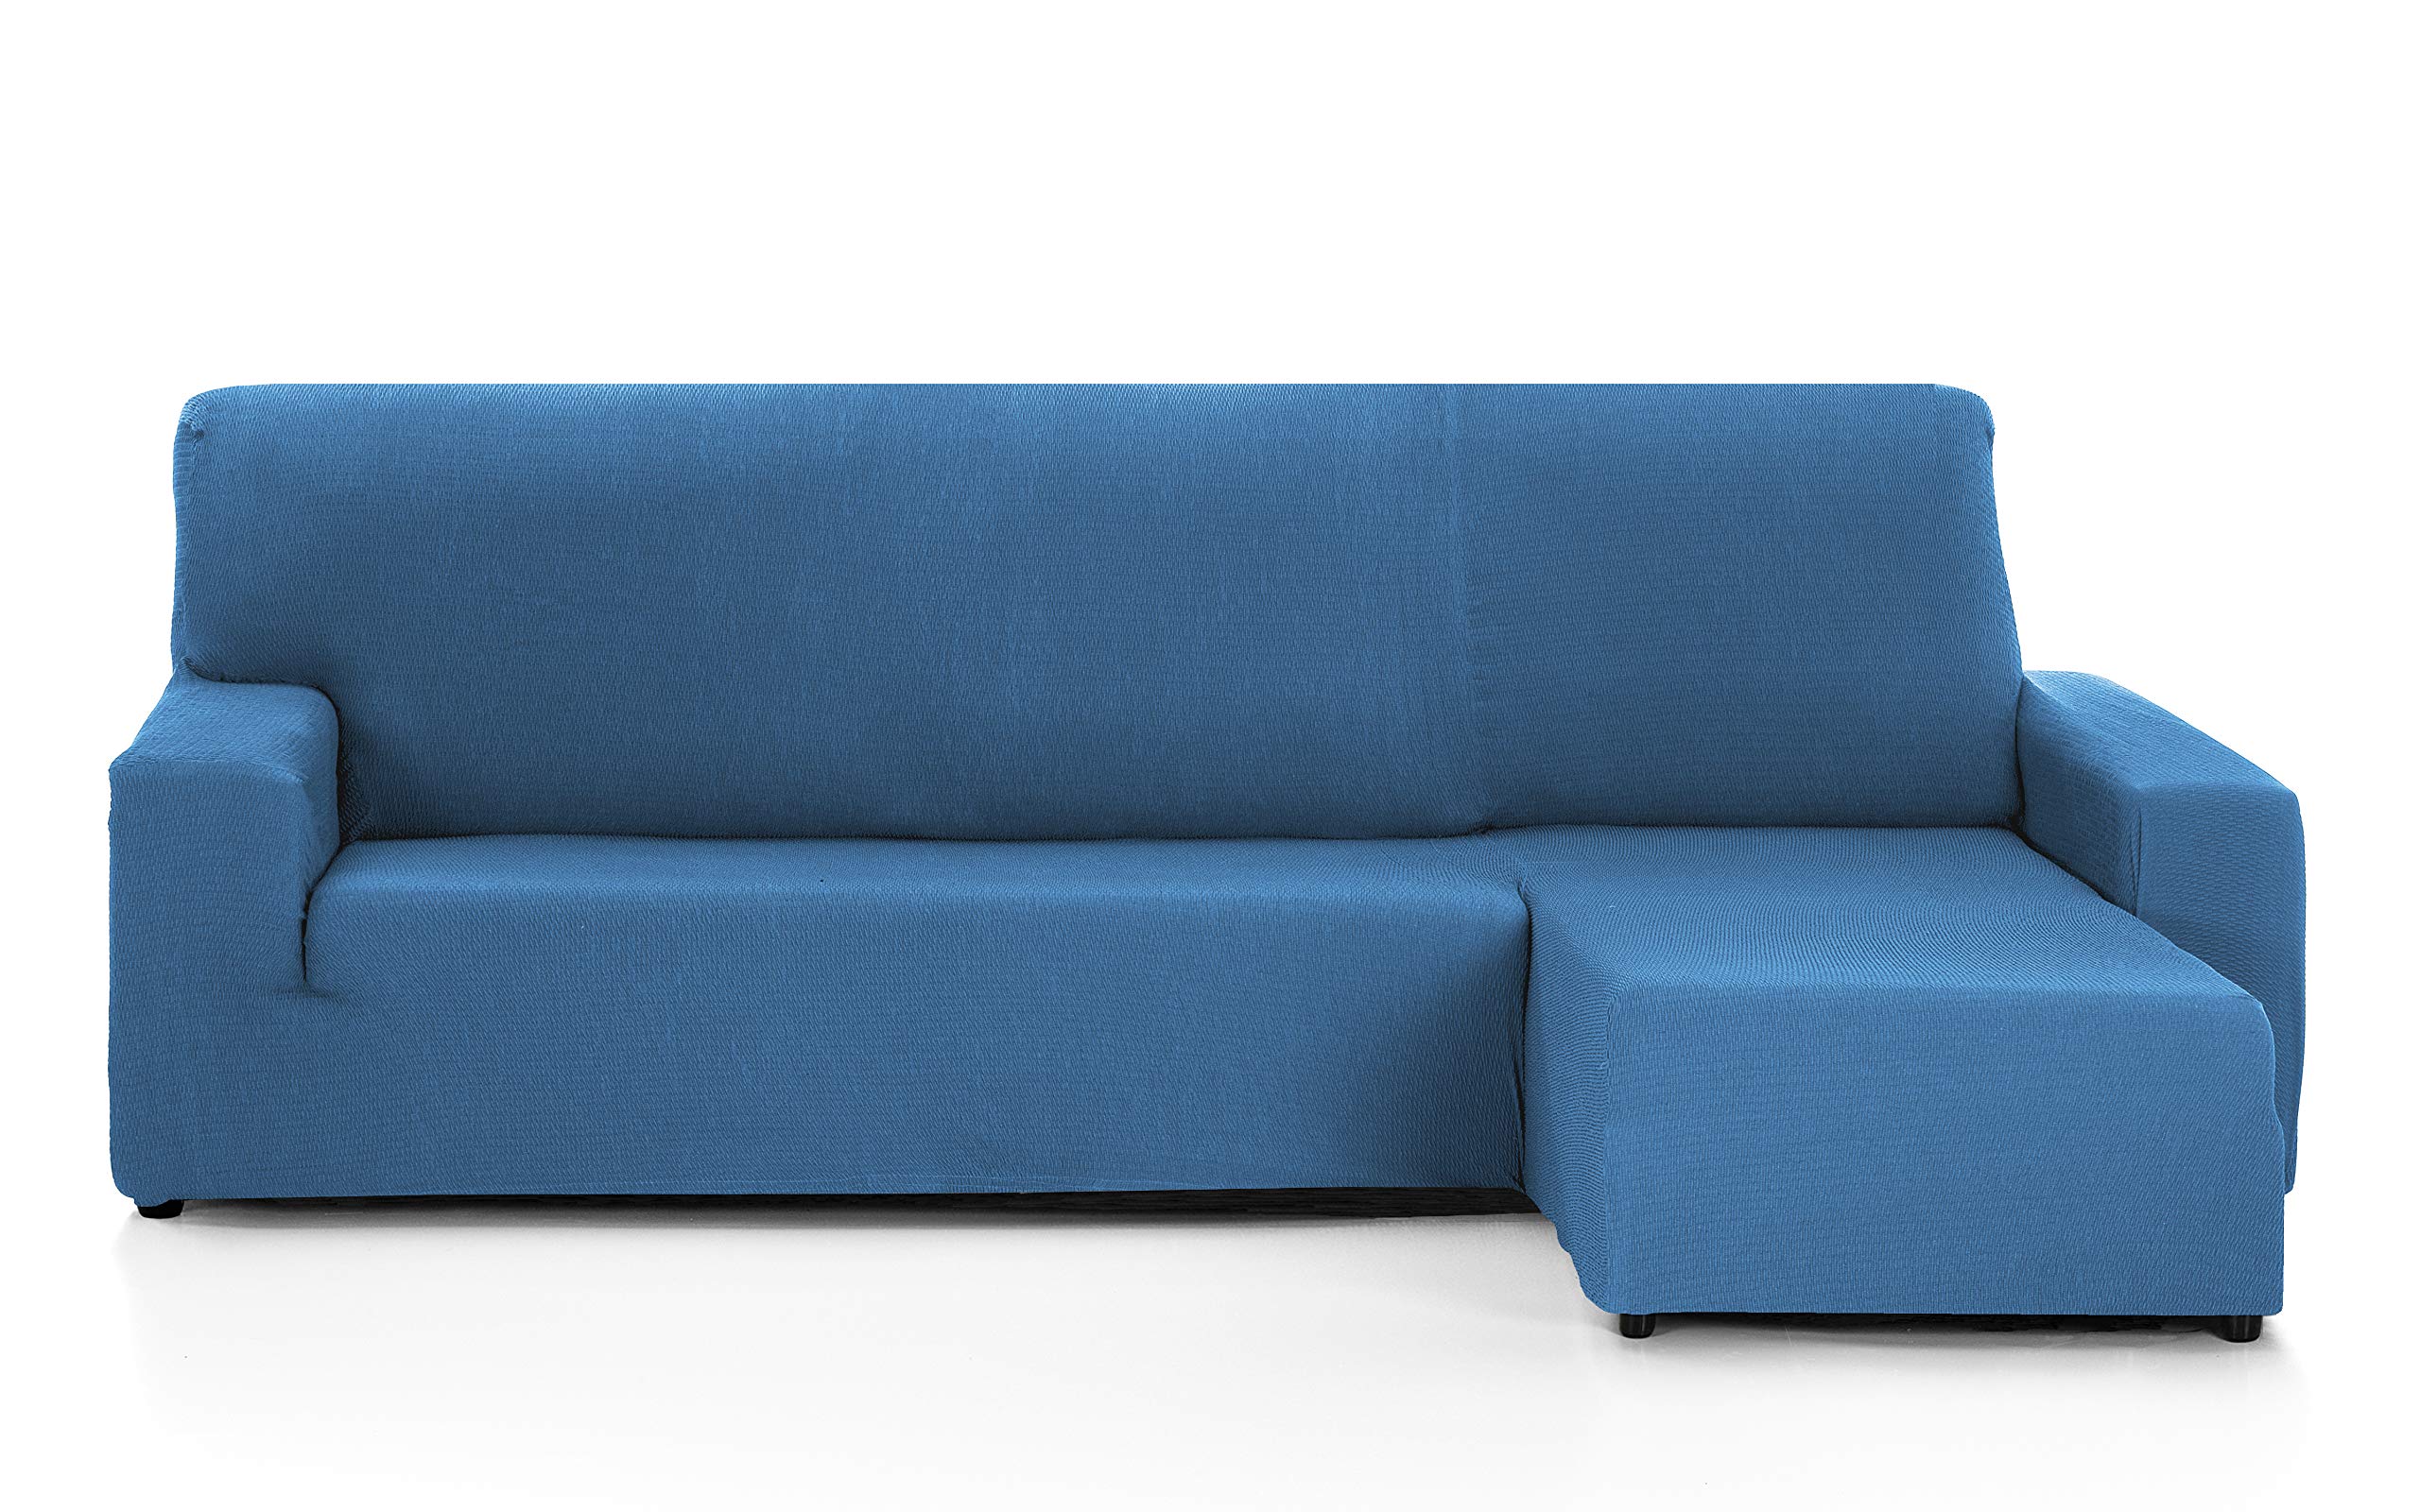 Martina Home - Sofabezug für Chaise Longue, Modell Túnez, Stoff, Blau (Azafata), kurzes Eckteil rechts, 32x17x42 cm